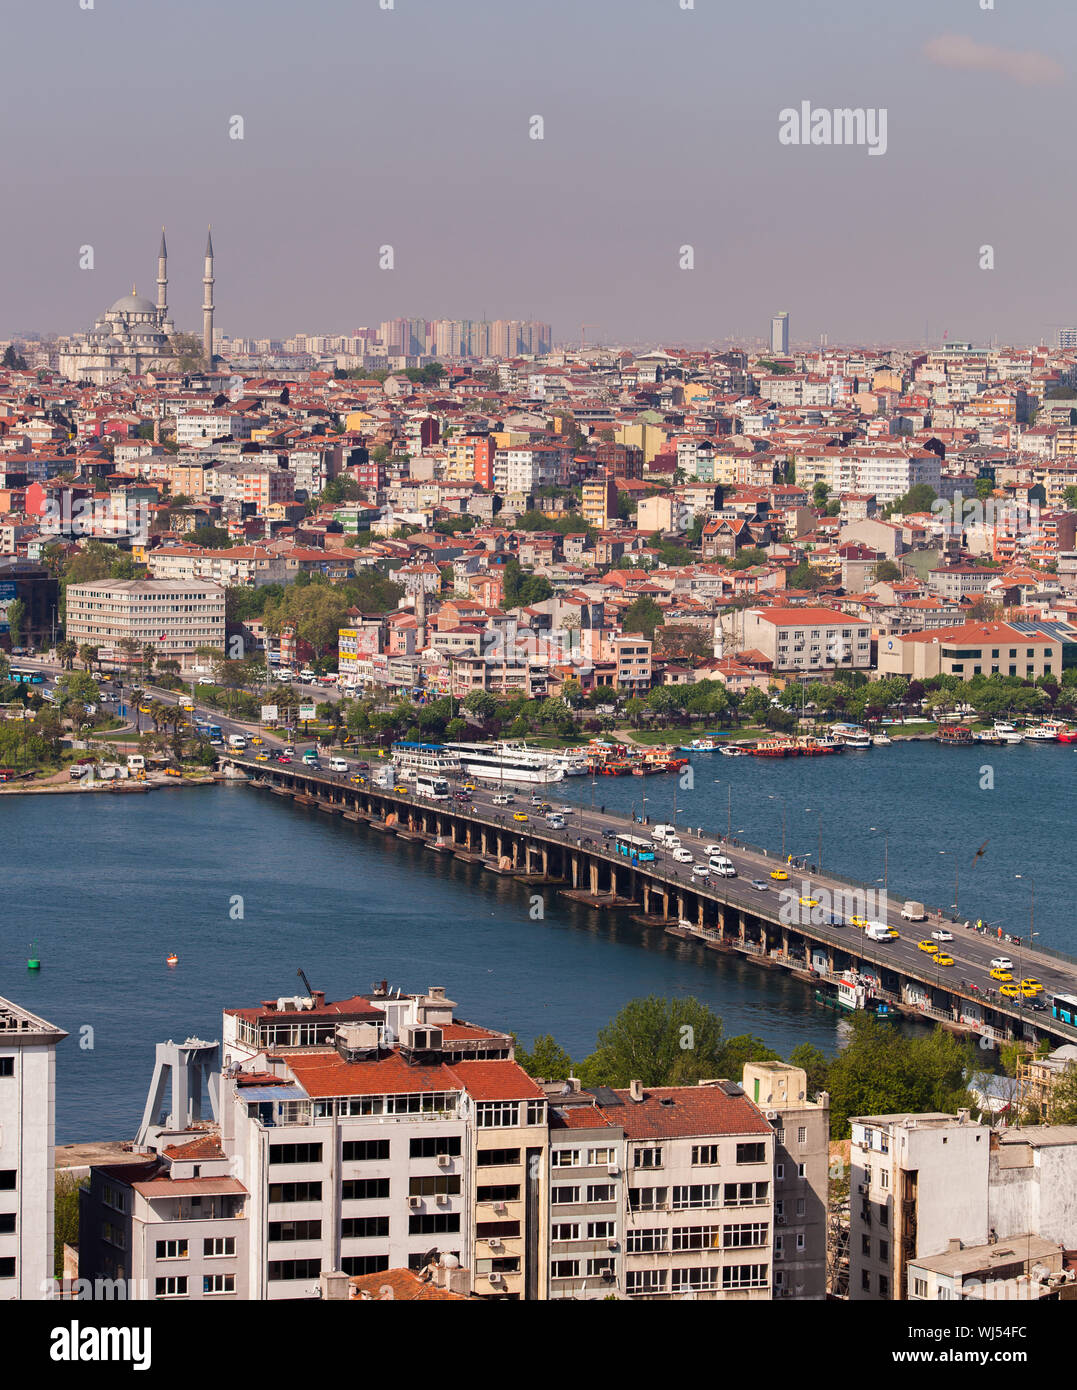 ISTANBUL, Türkei - 28. April: Die Atatürk Brücke über den Bosporus am 28. April 2012 in Istanbul, Türkei vor dem Anzac Day. Der Bosporus teilt Tu Stockfoto